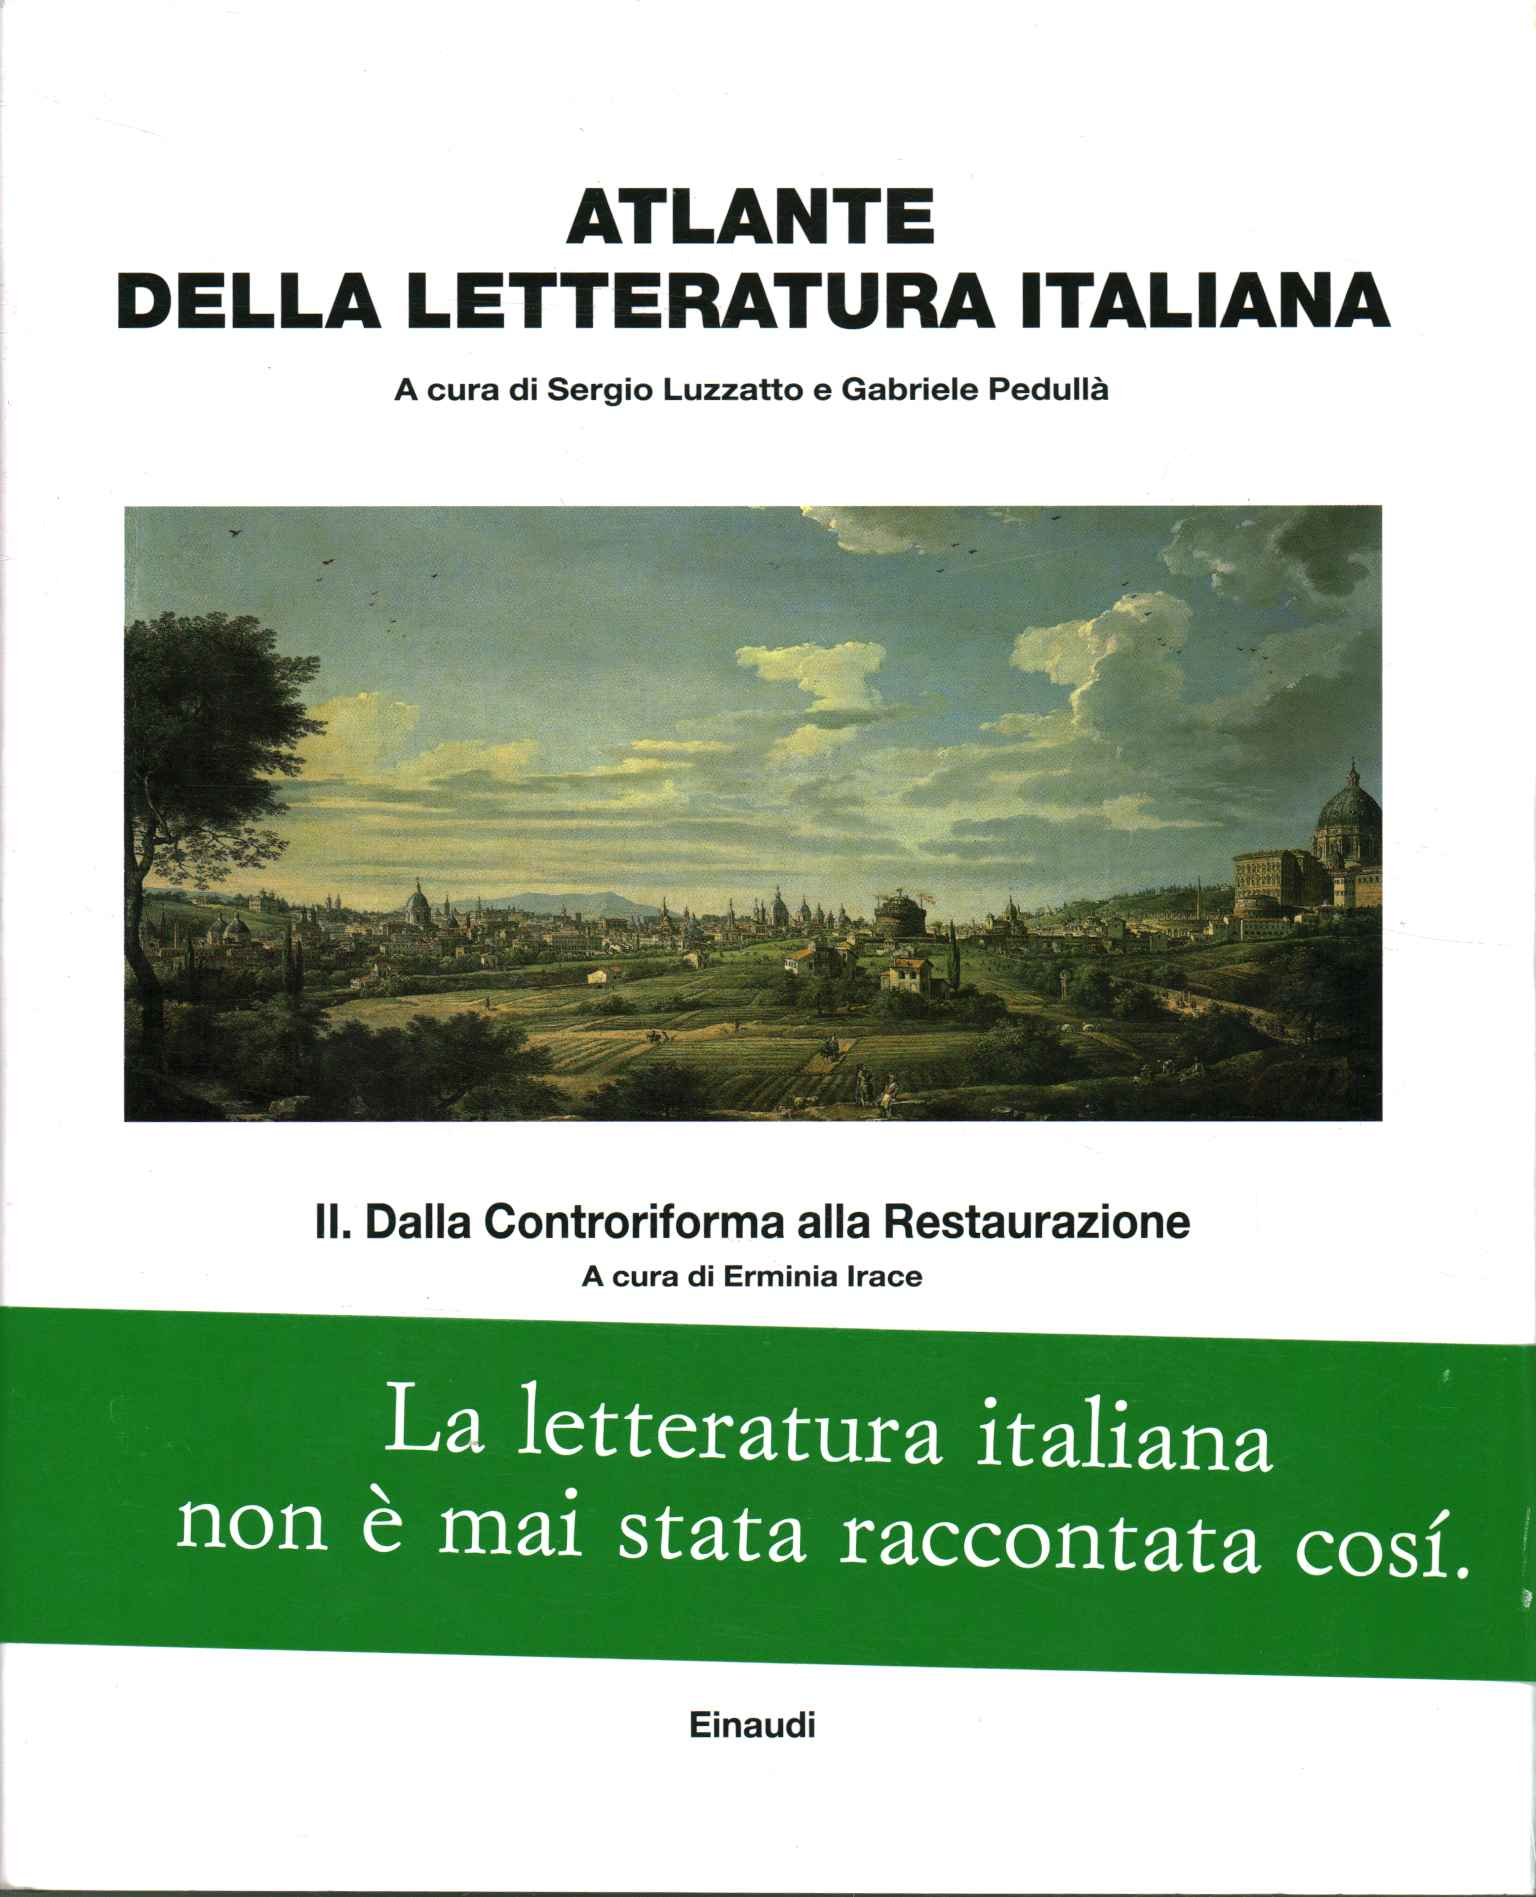 Atlas of Italian literature. Dalla%,Atlas of Italian literature. Dalla%,Atlas of Italian literature. From the%